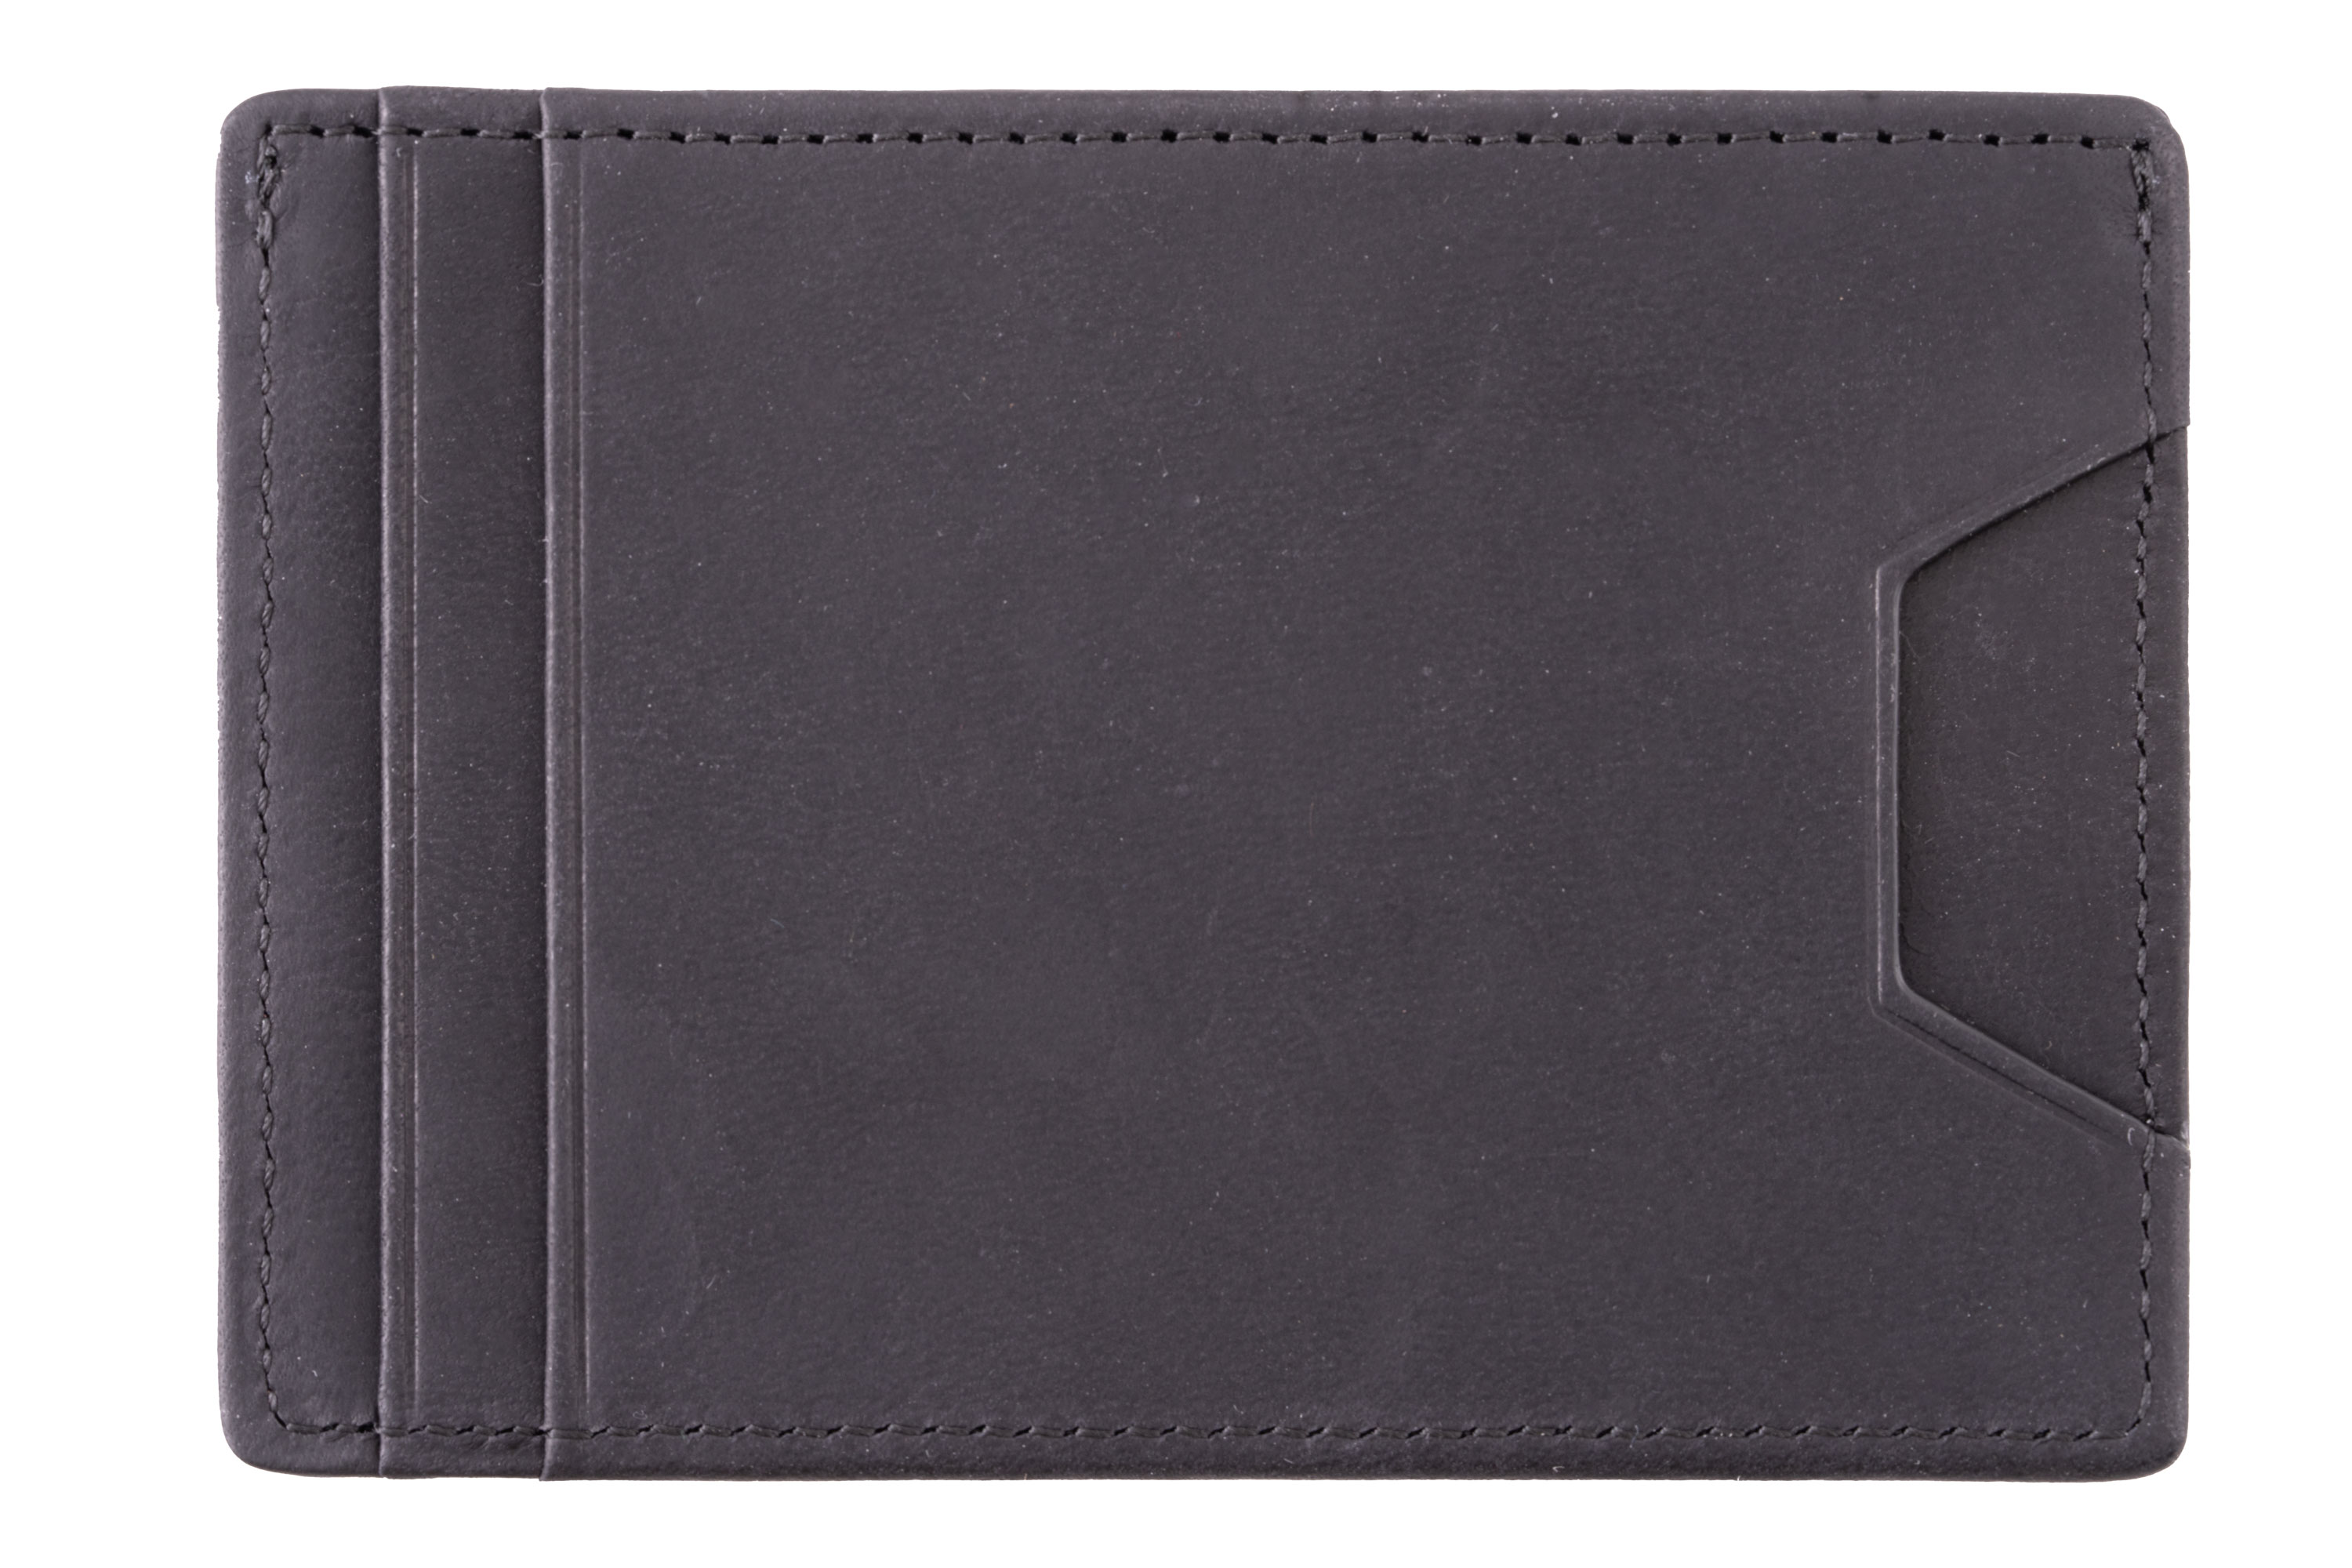 Slim Wallet - 4CC - Americana Black Full-Grain Leather back view. 